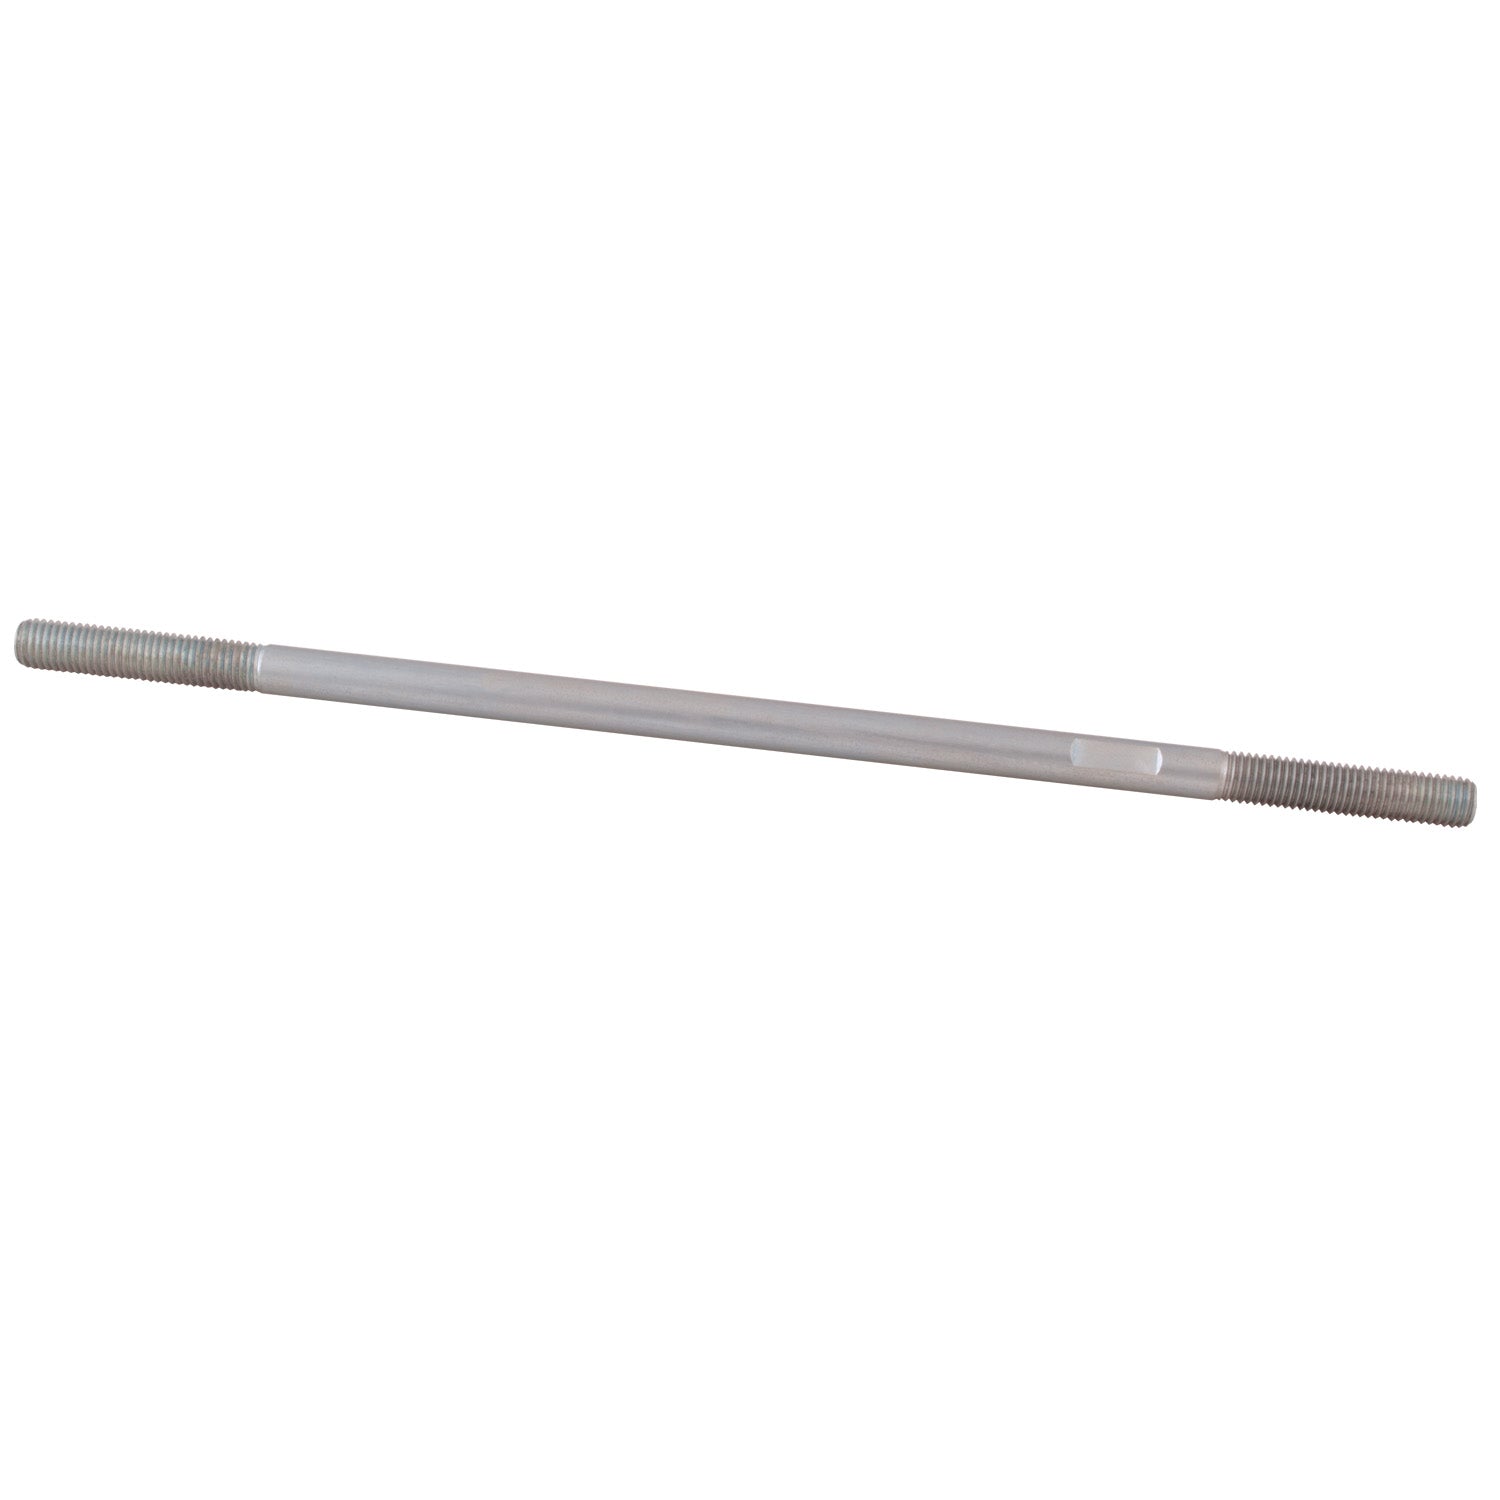 QA1 1698-114 Linkage Rod, Carbon Steel 1/4-28 - 1/4-28 X 7 inch Long